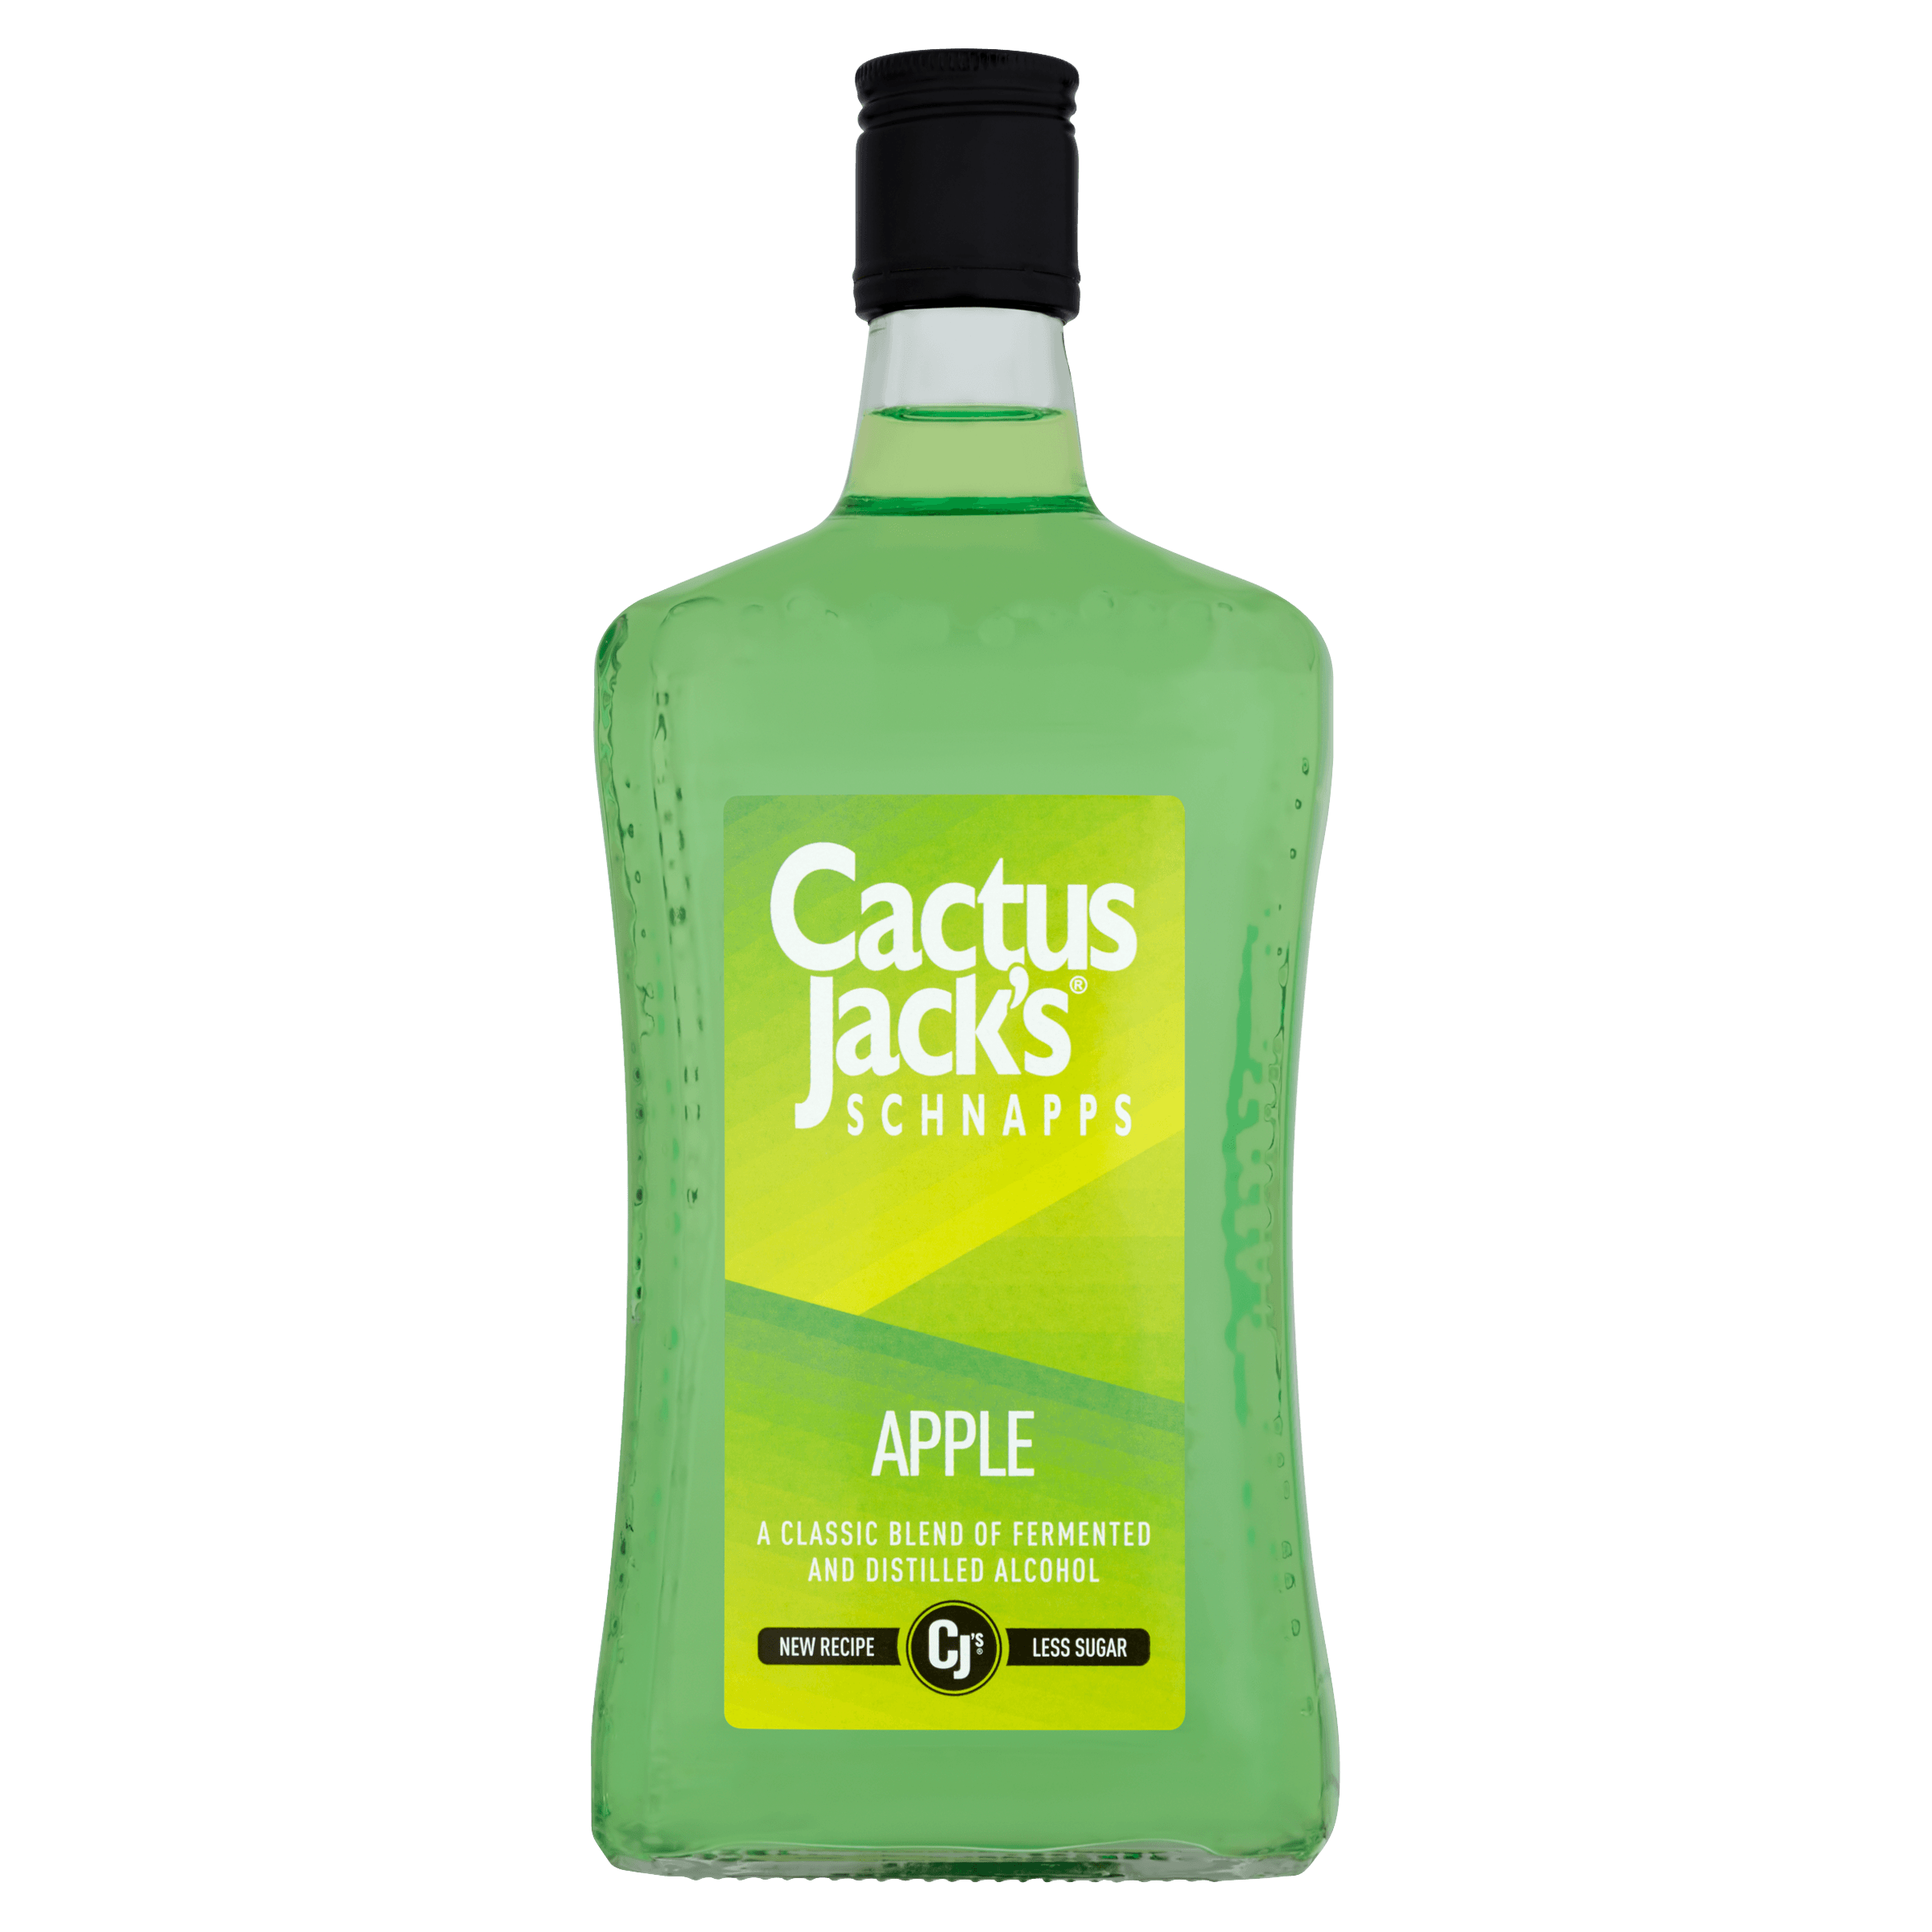 Cactus Jack's – ICB Brands